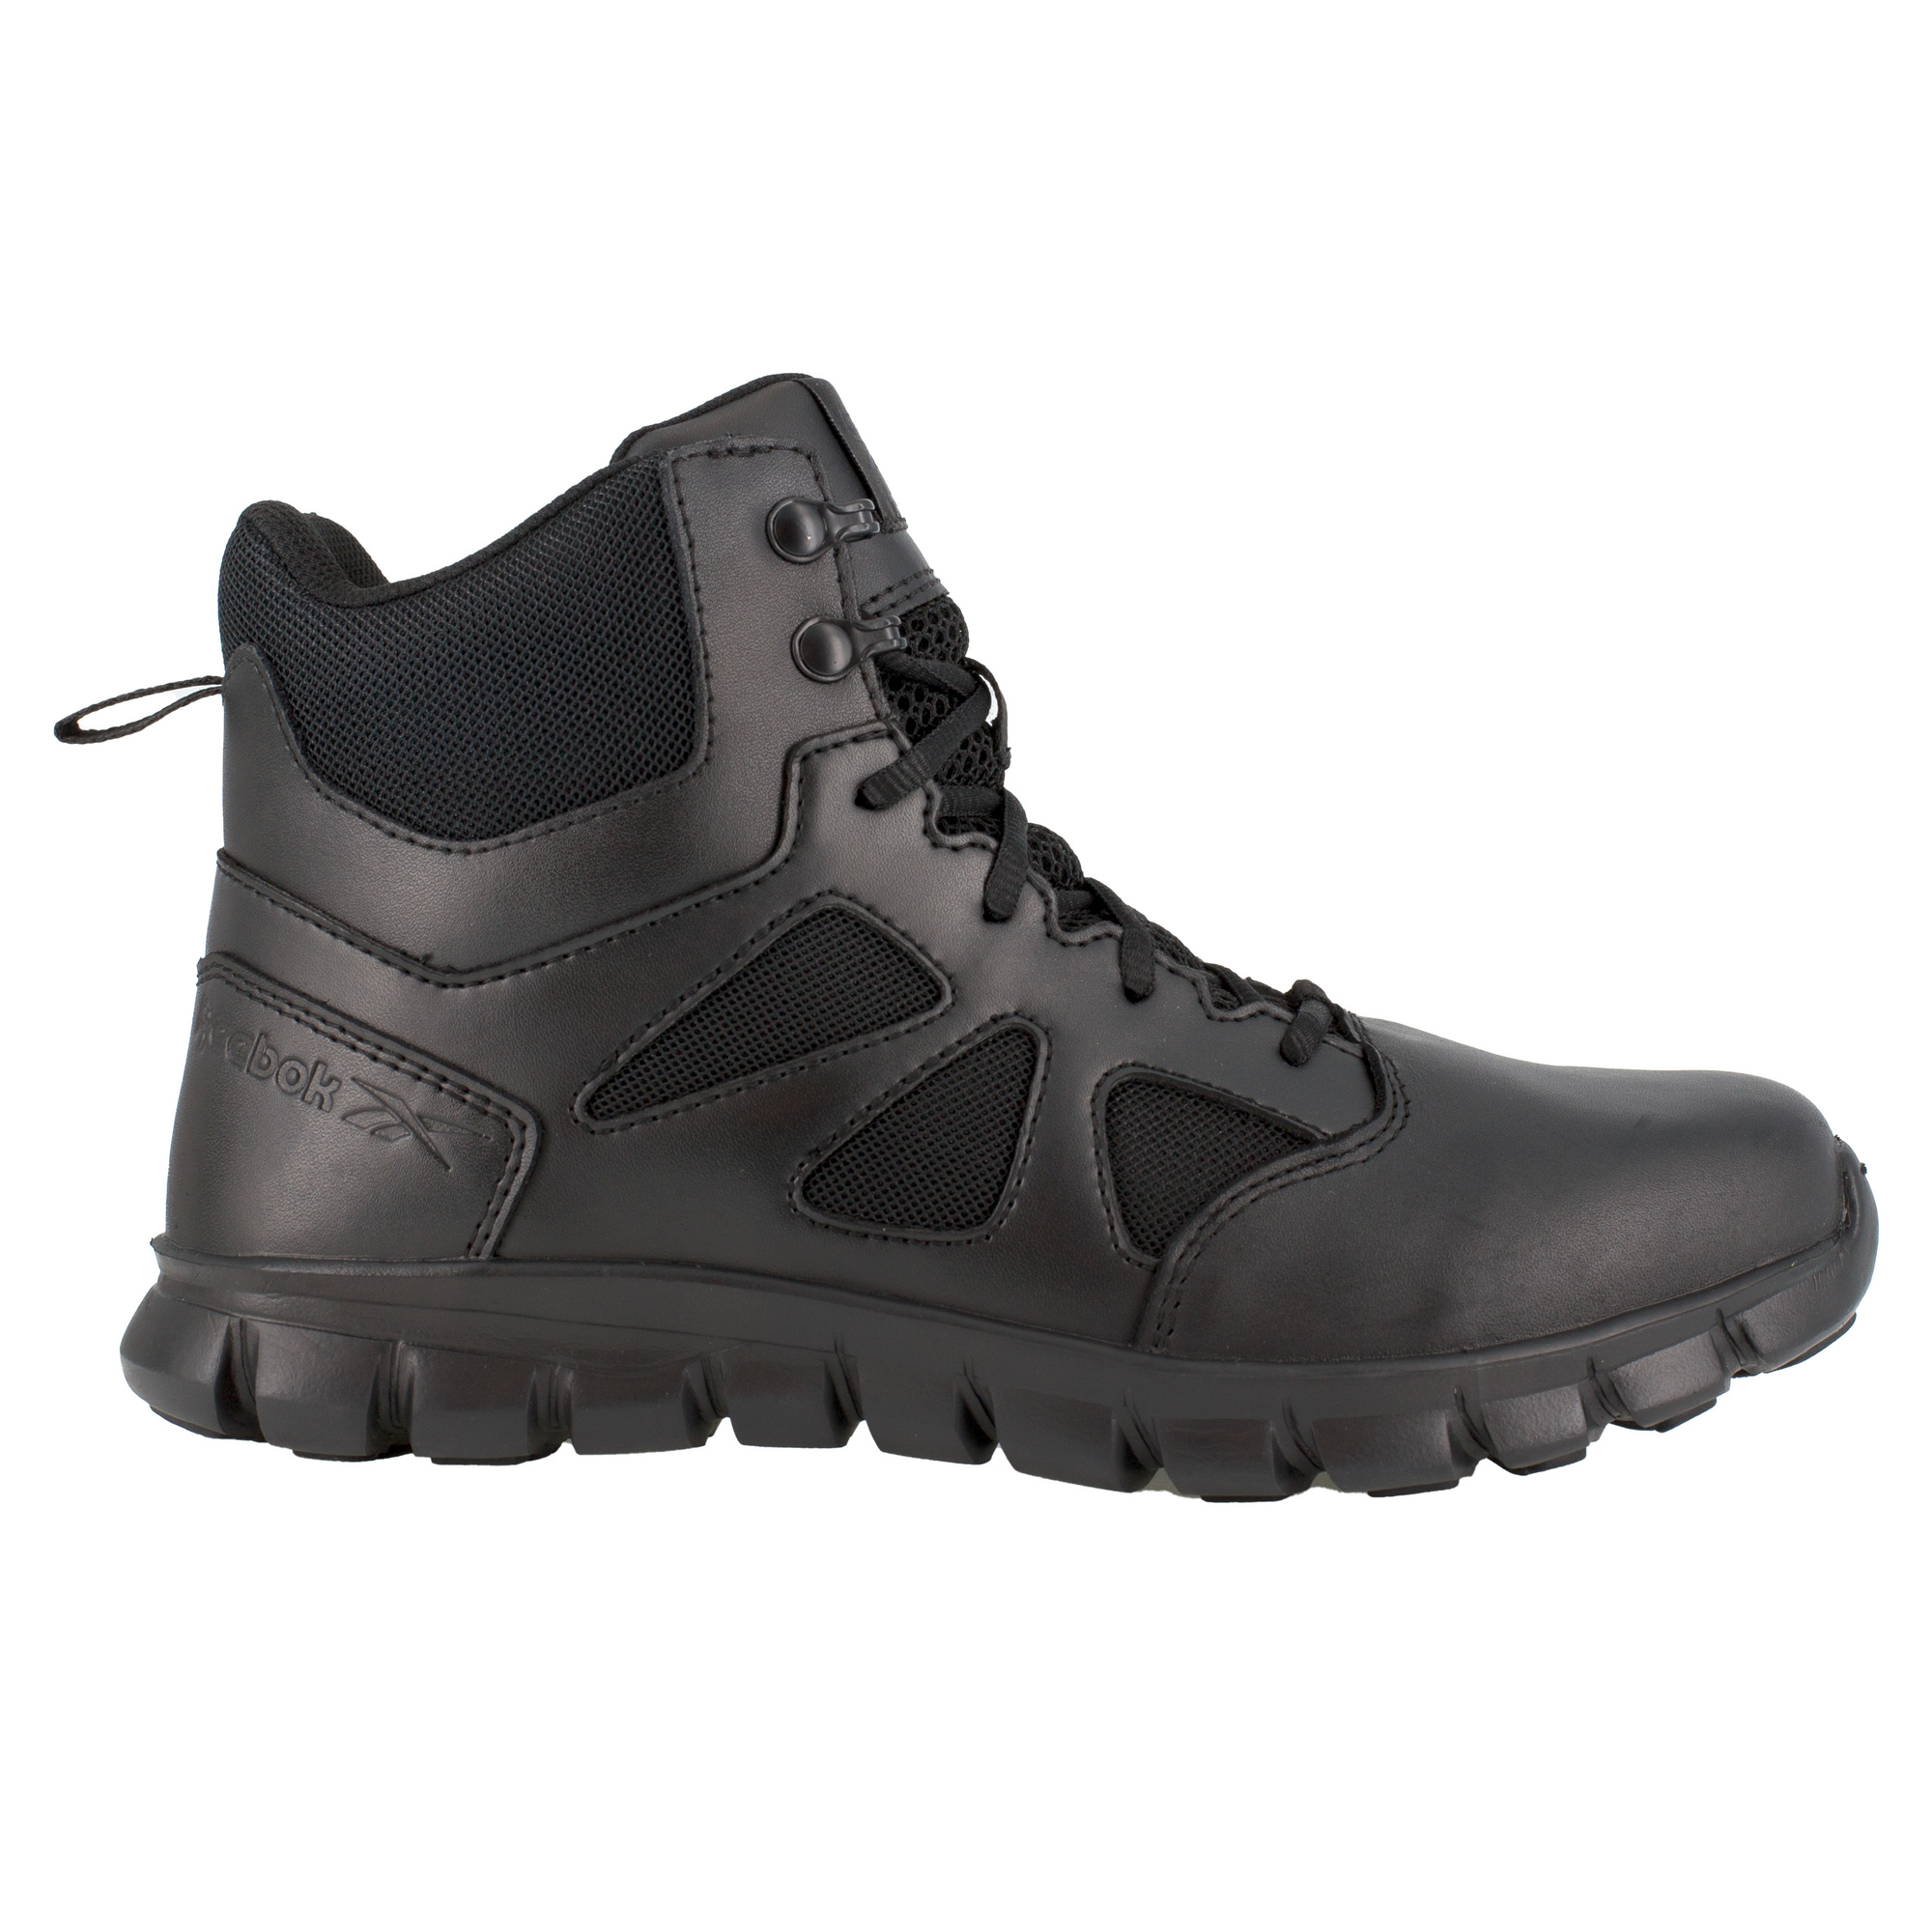 Reebok, 6Inch Tactical Boot w/Side Zipper, Size 10 1/2, Width Wide, Color Black, Model RB086